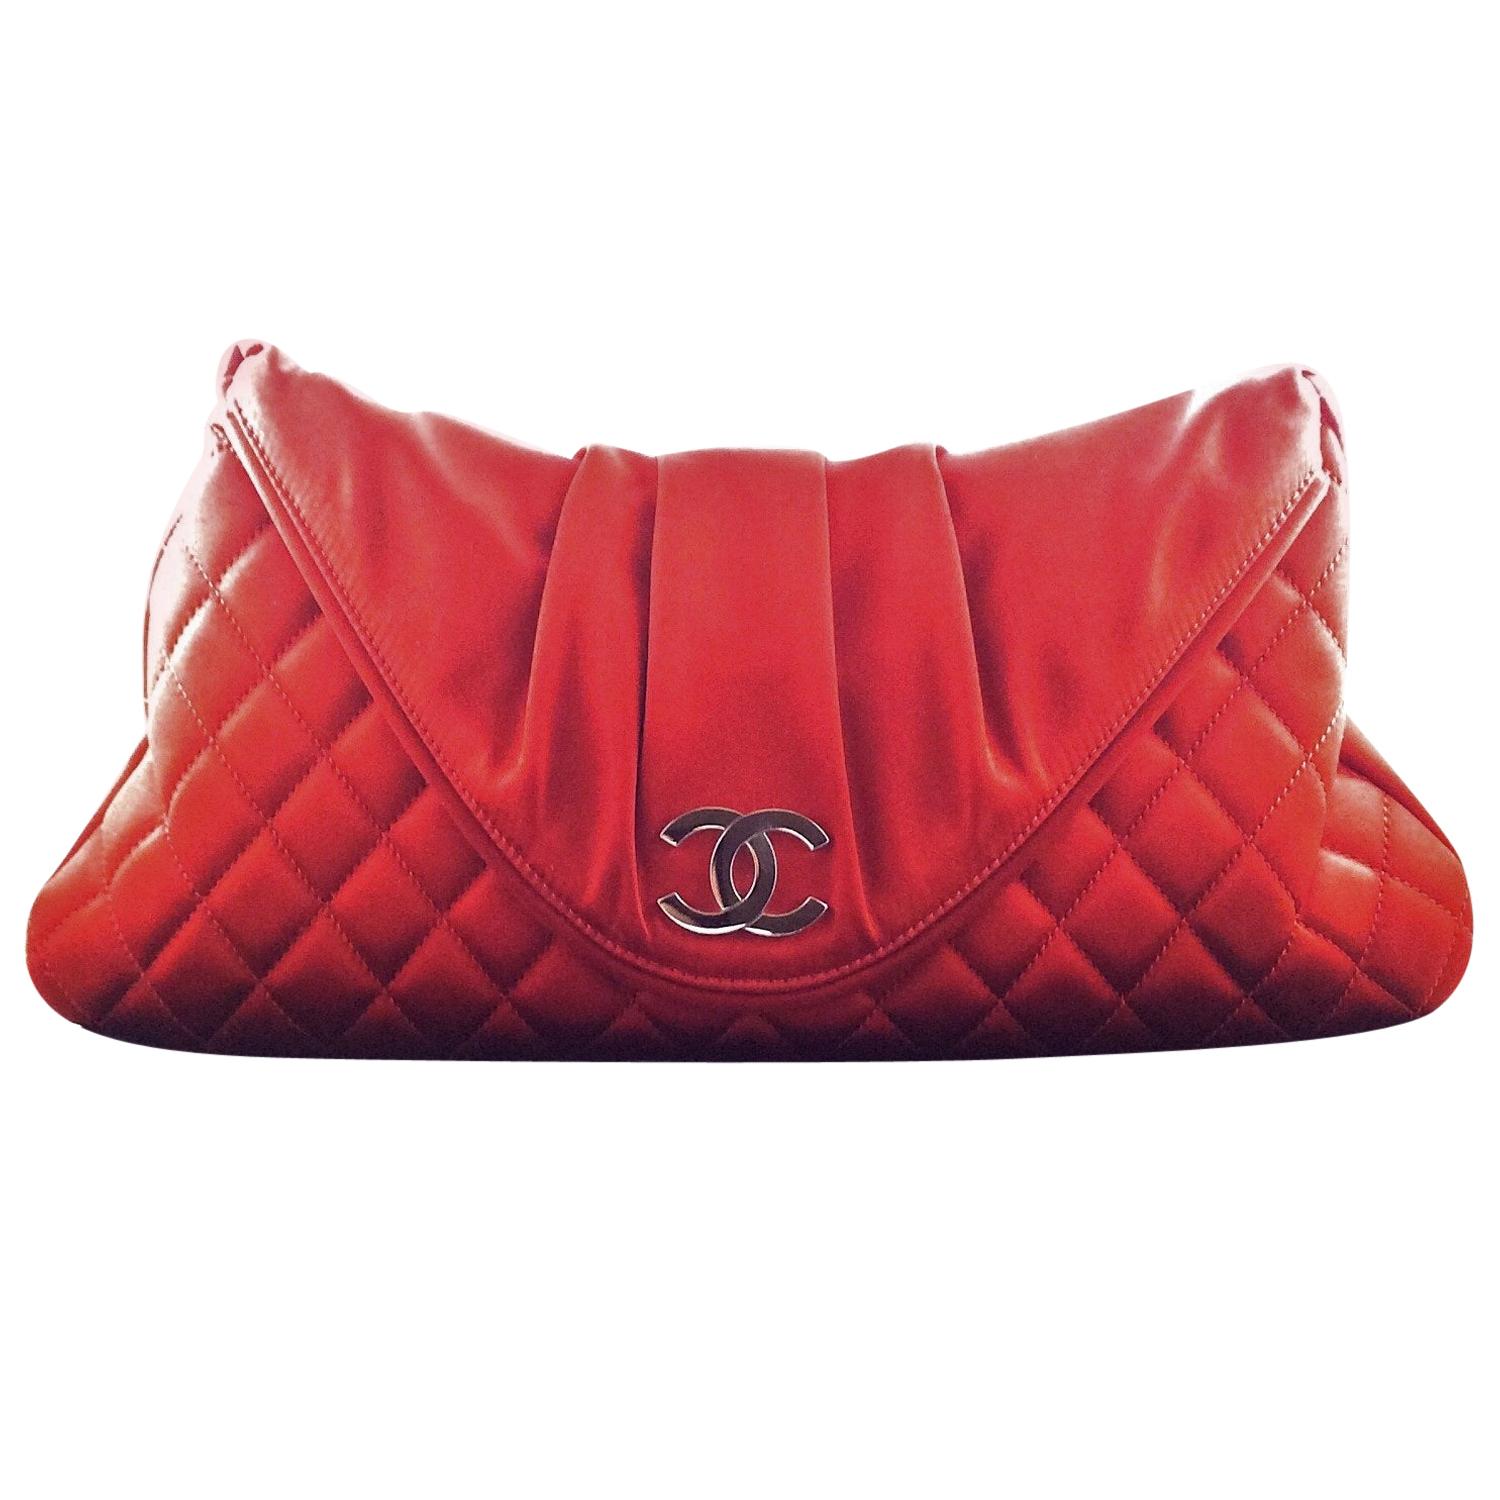 Chanel pouch, Bags, Fashion designer handbags